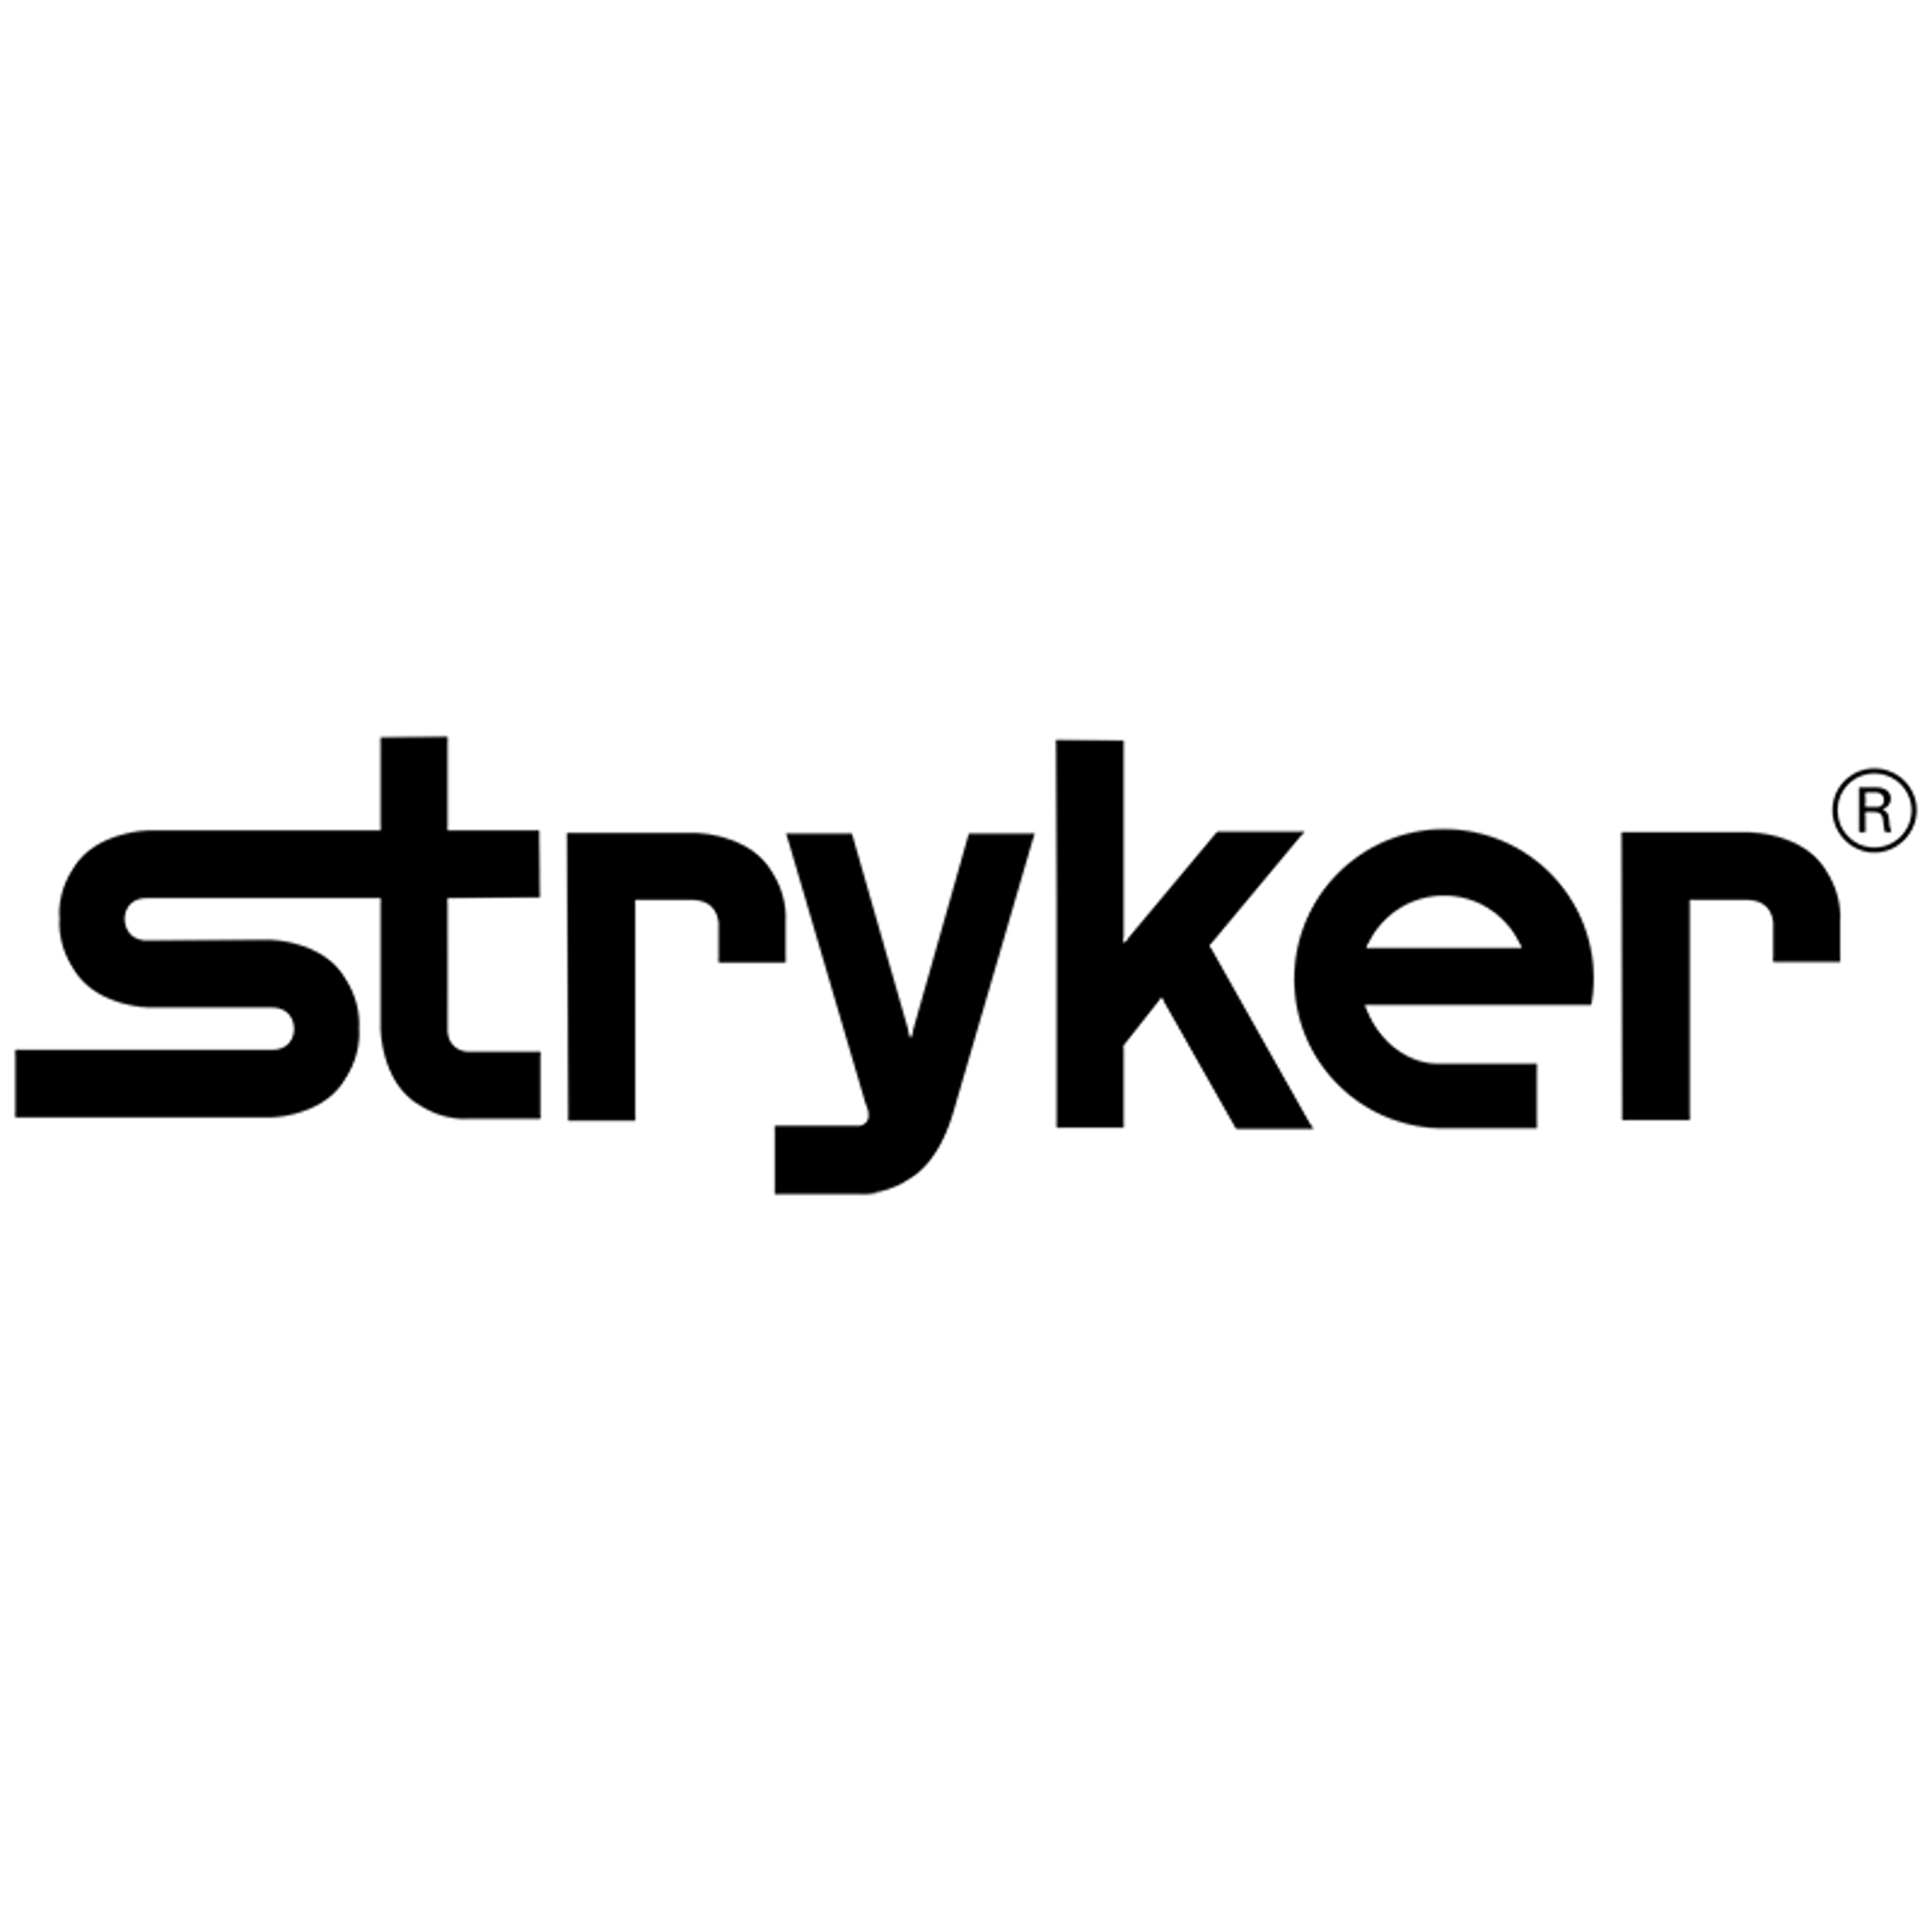 Equiptrack includes Stryker equipment